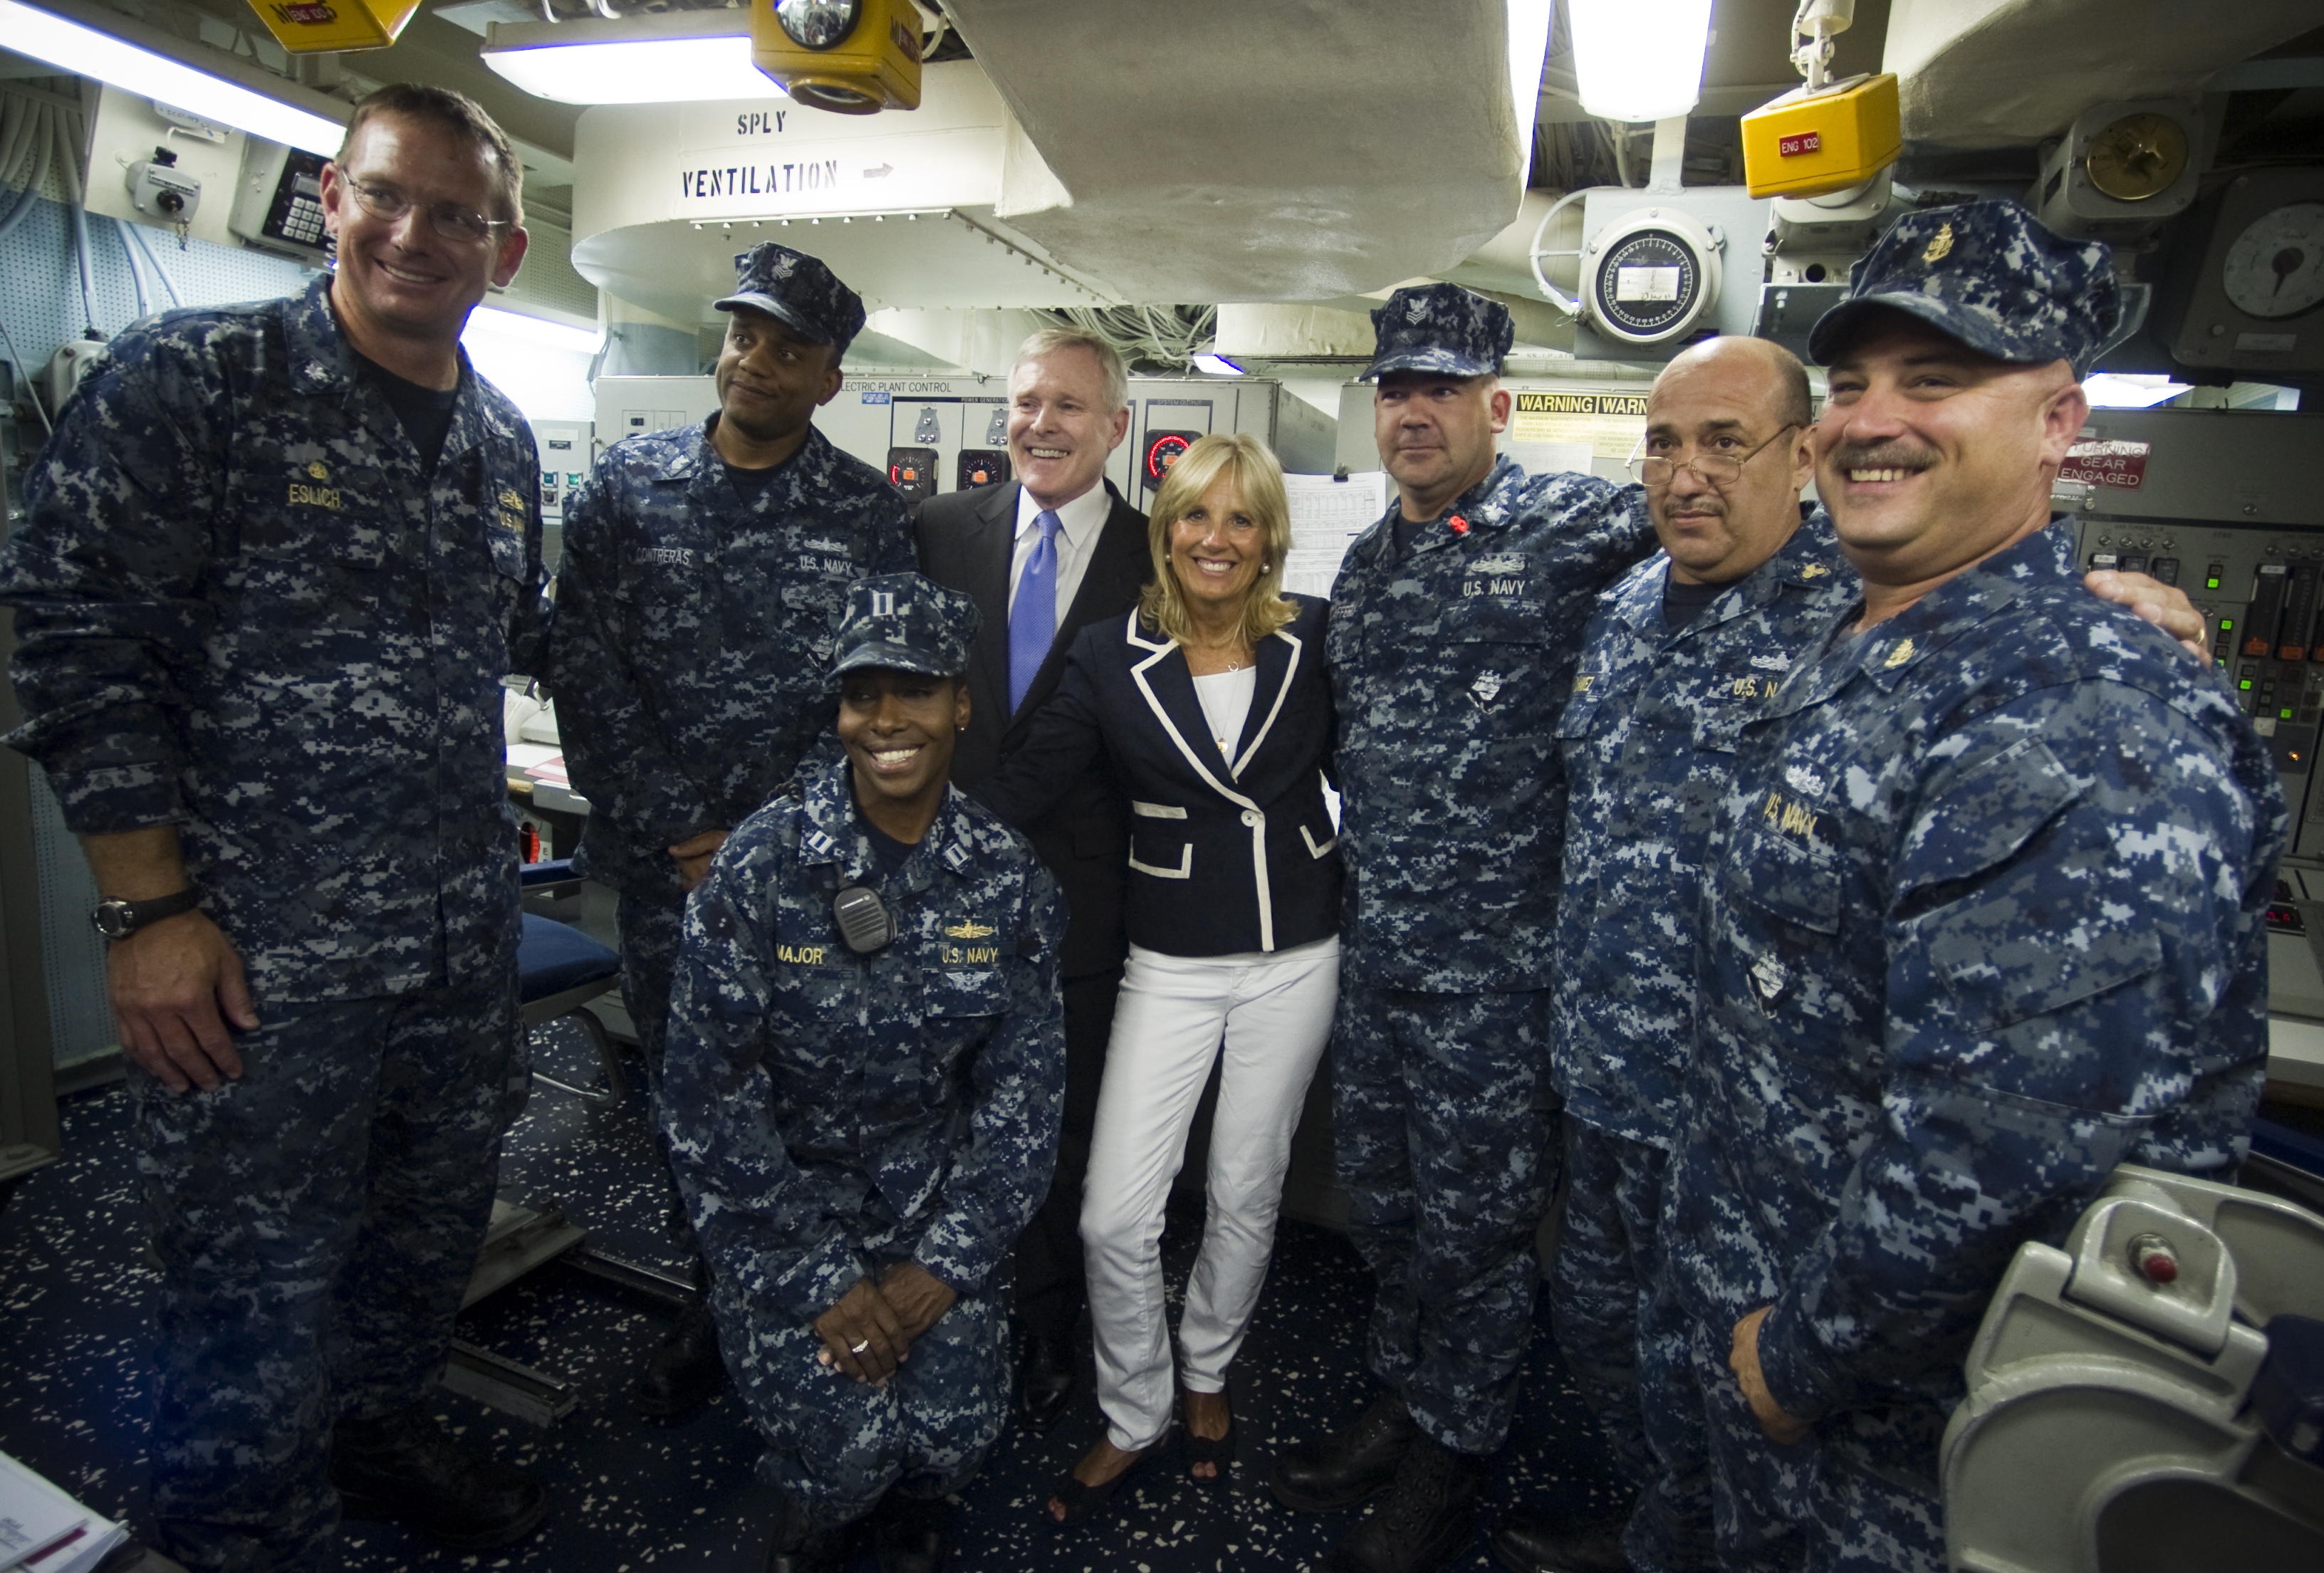 Dr. Biden visiting the Navy in Greece